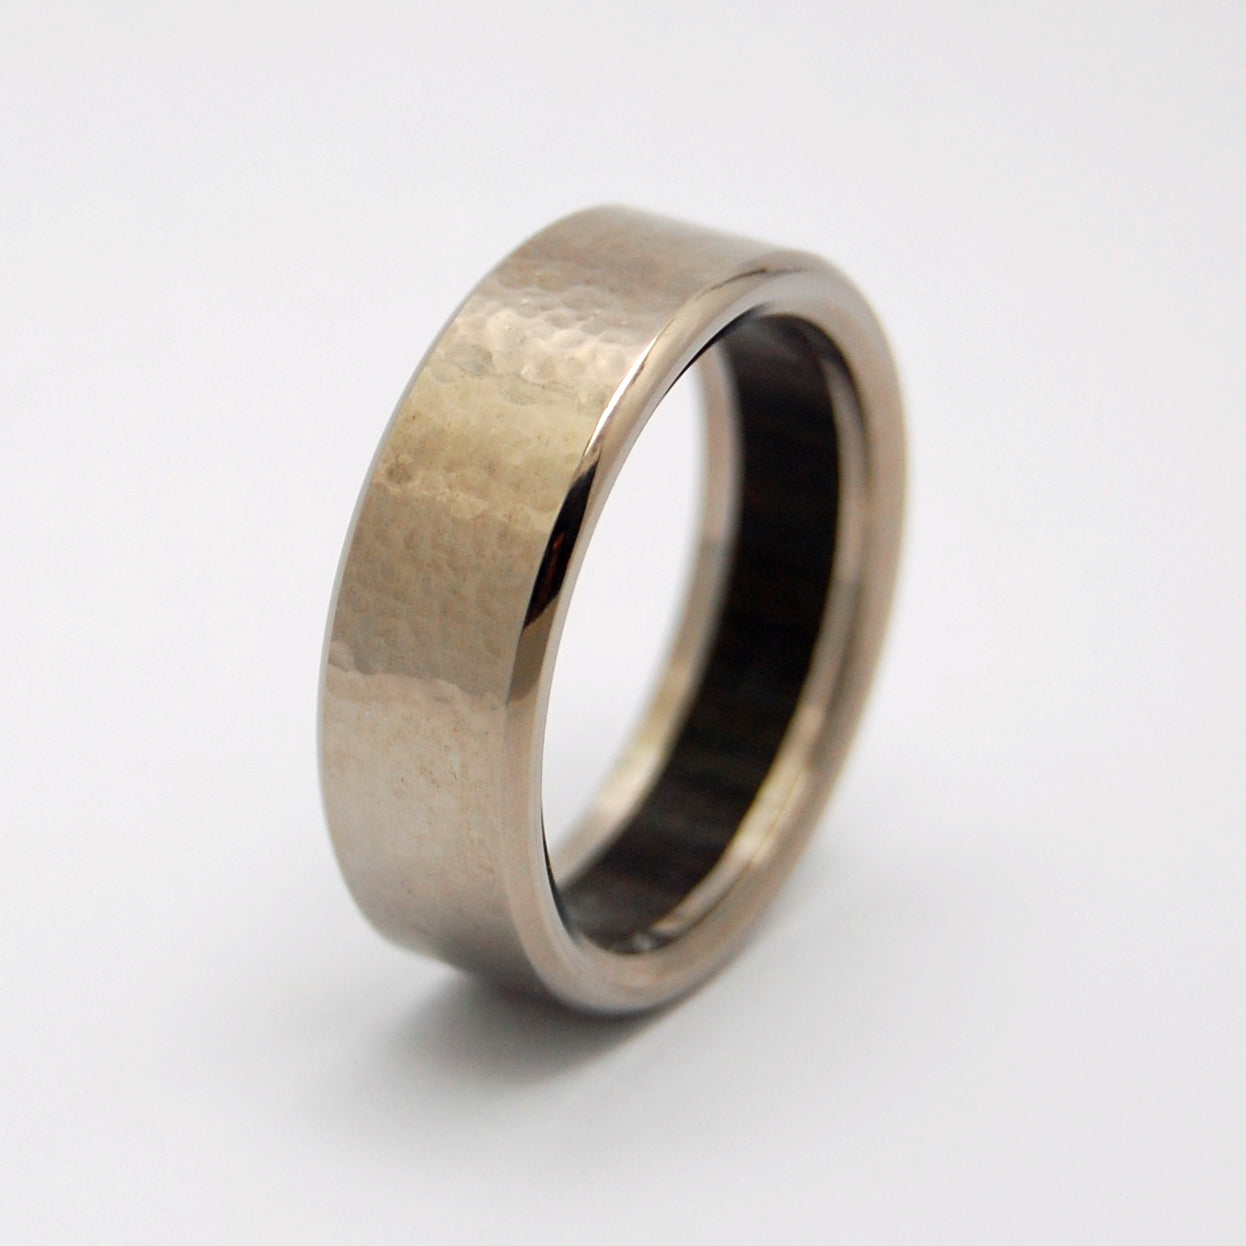 BOG | Aged Bog Oak Wood & Titanium - Unique Wedding Rings - Titanium Wedding Rings - Minter and Richter Designs